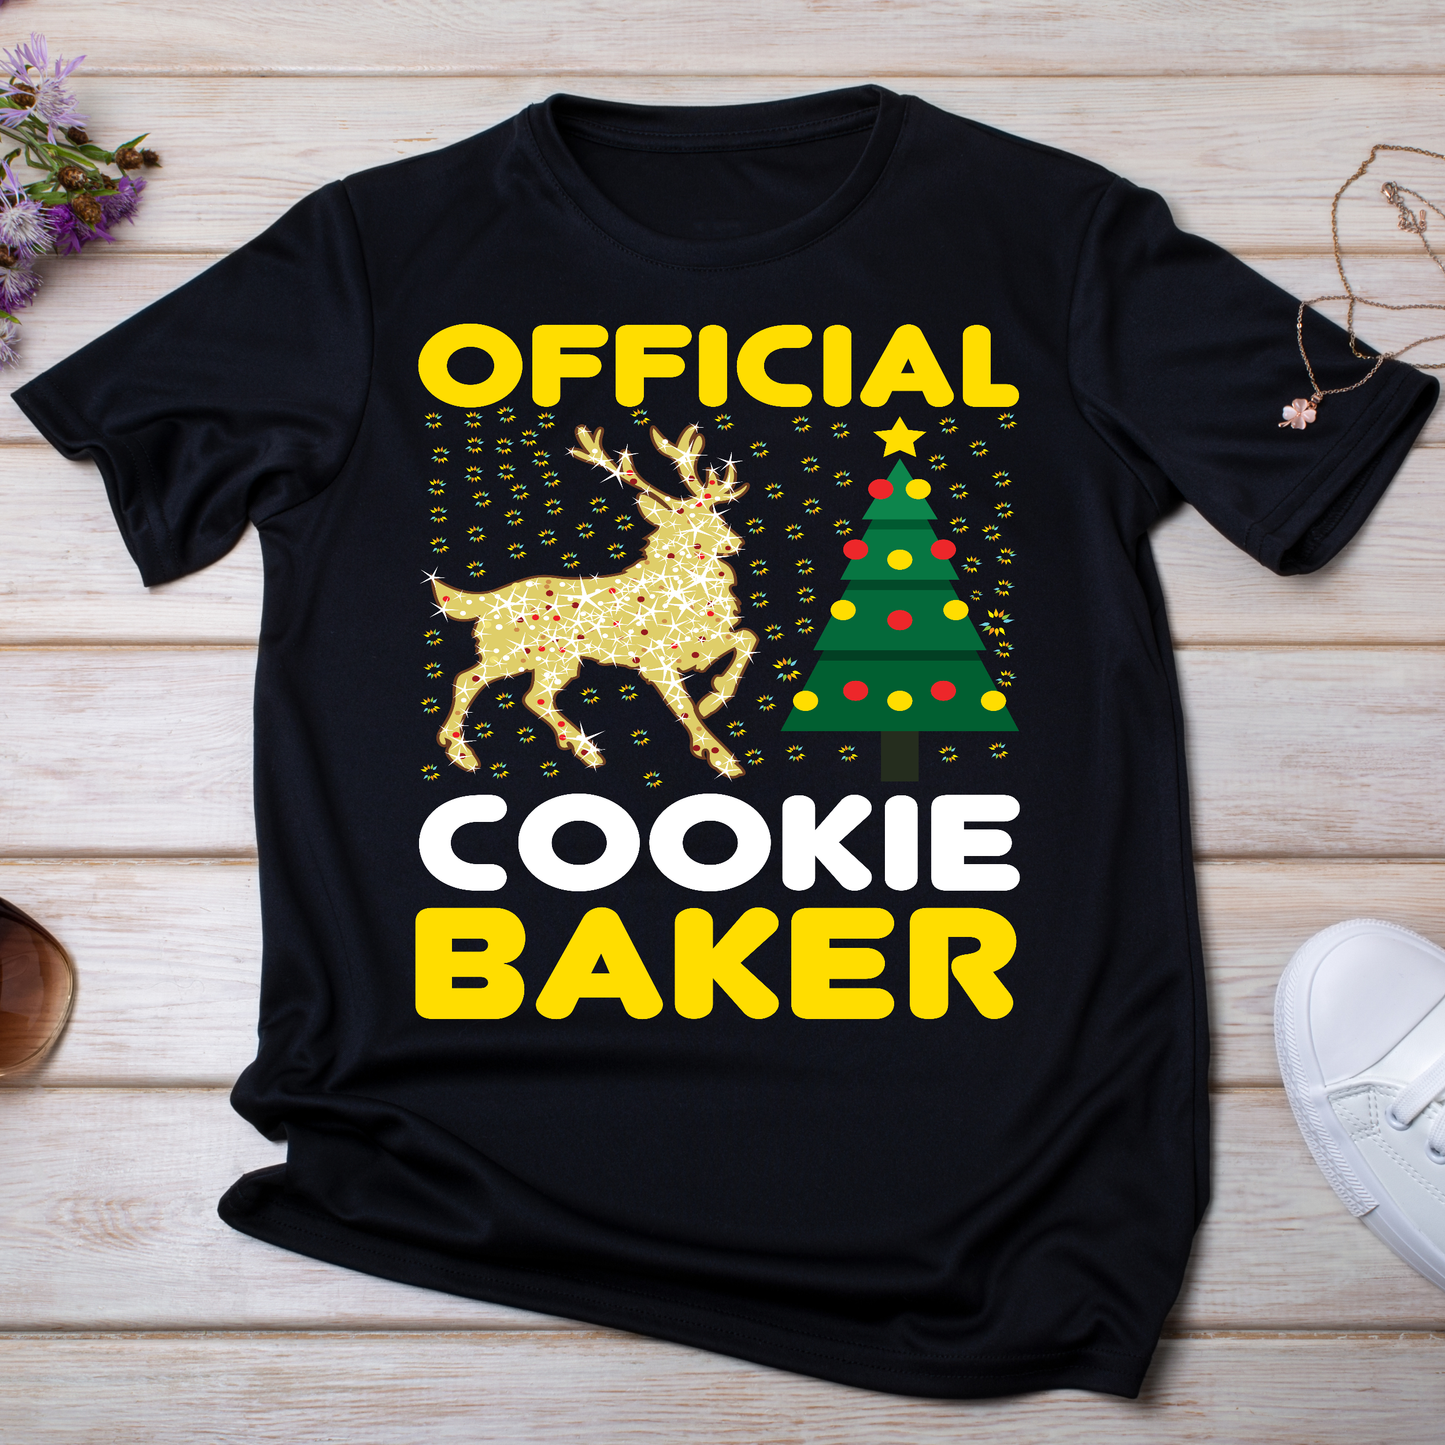 Official cookie baker reindeer cute Women's Christmas t-shirt - Premium t-shirt from Lees Krazy Teez - Just $19.95! Shop now at Lees Krazy Teez